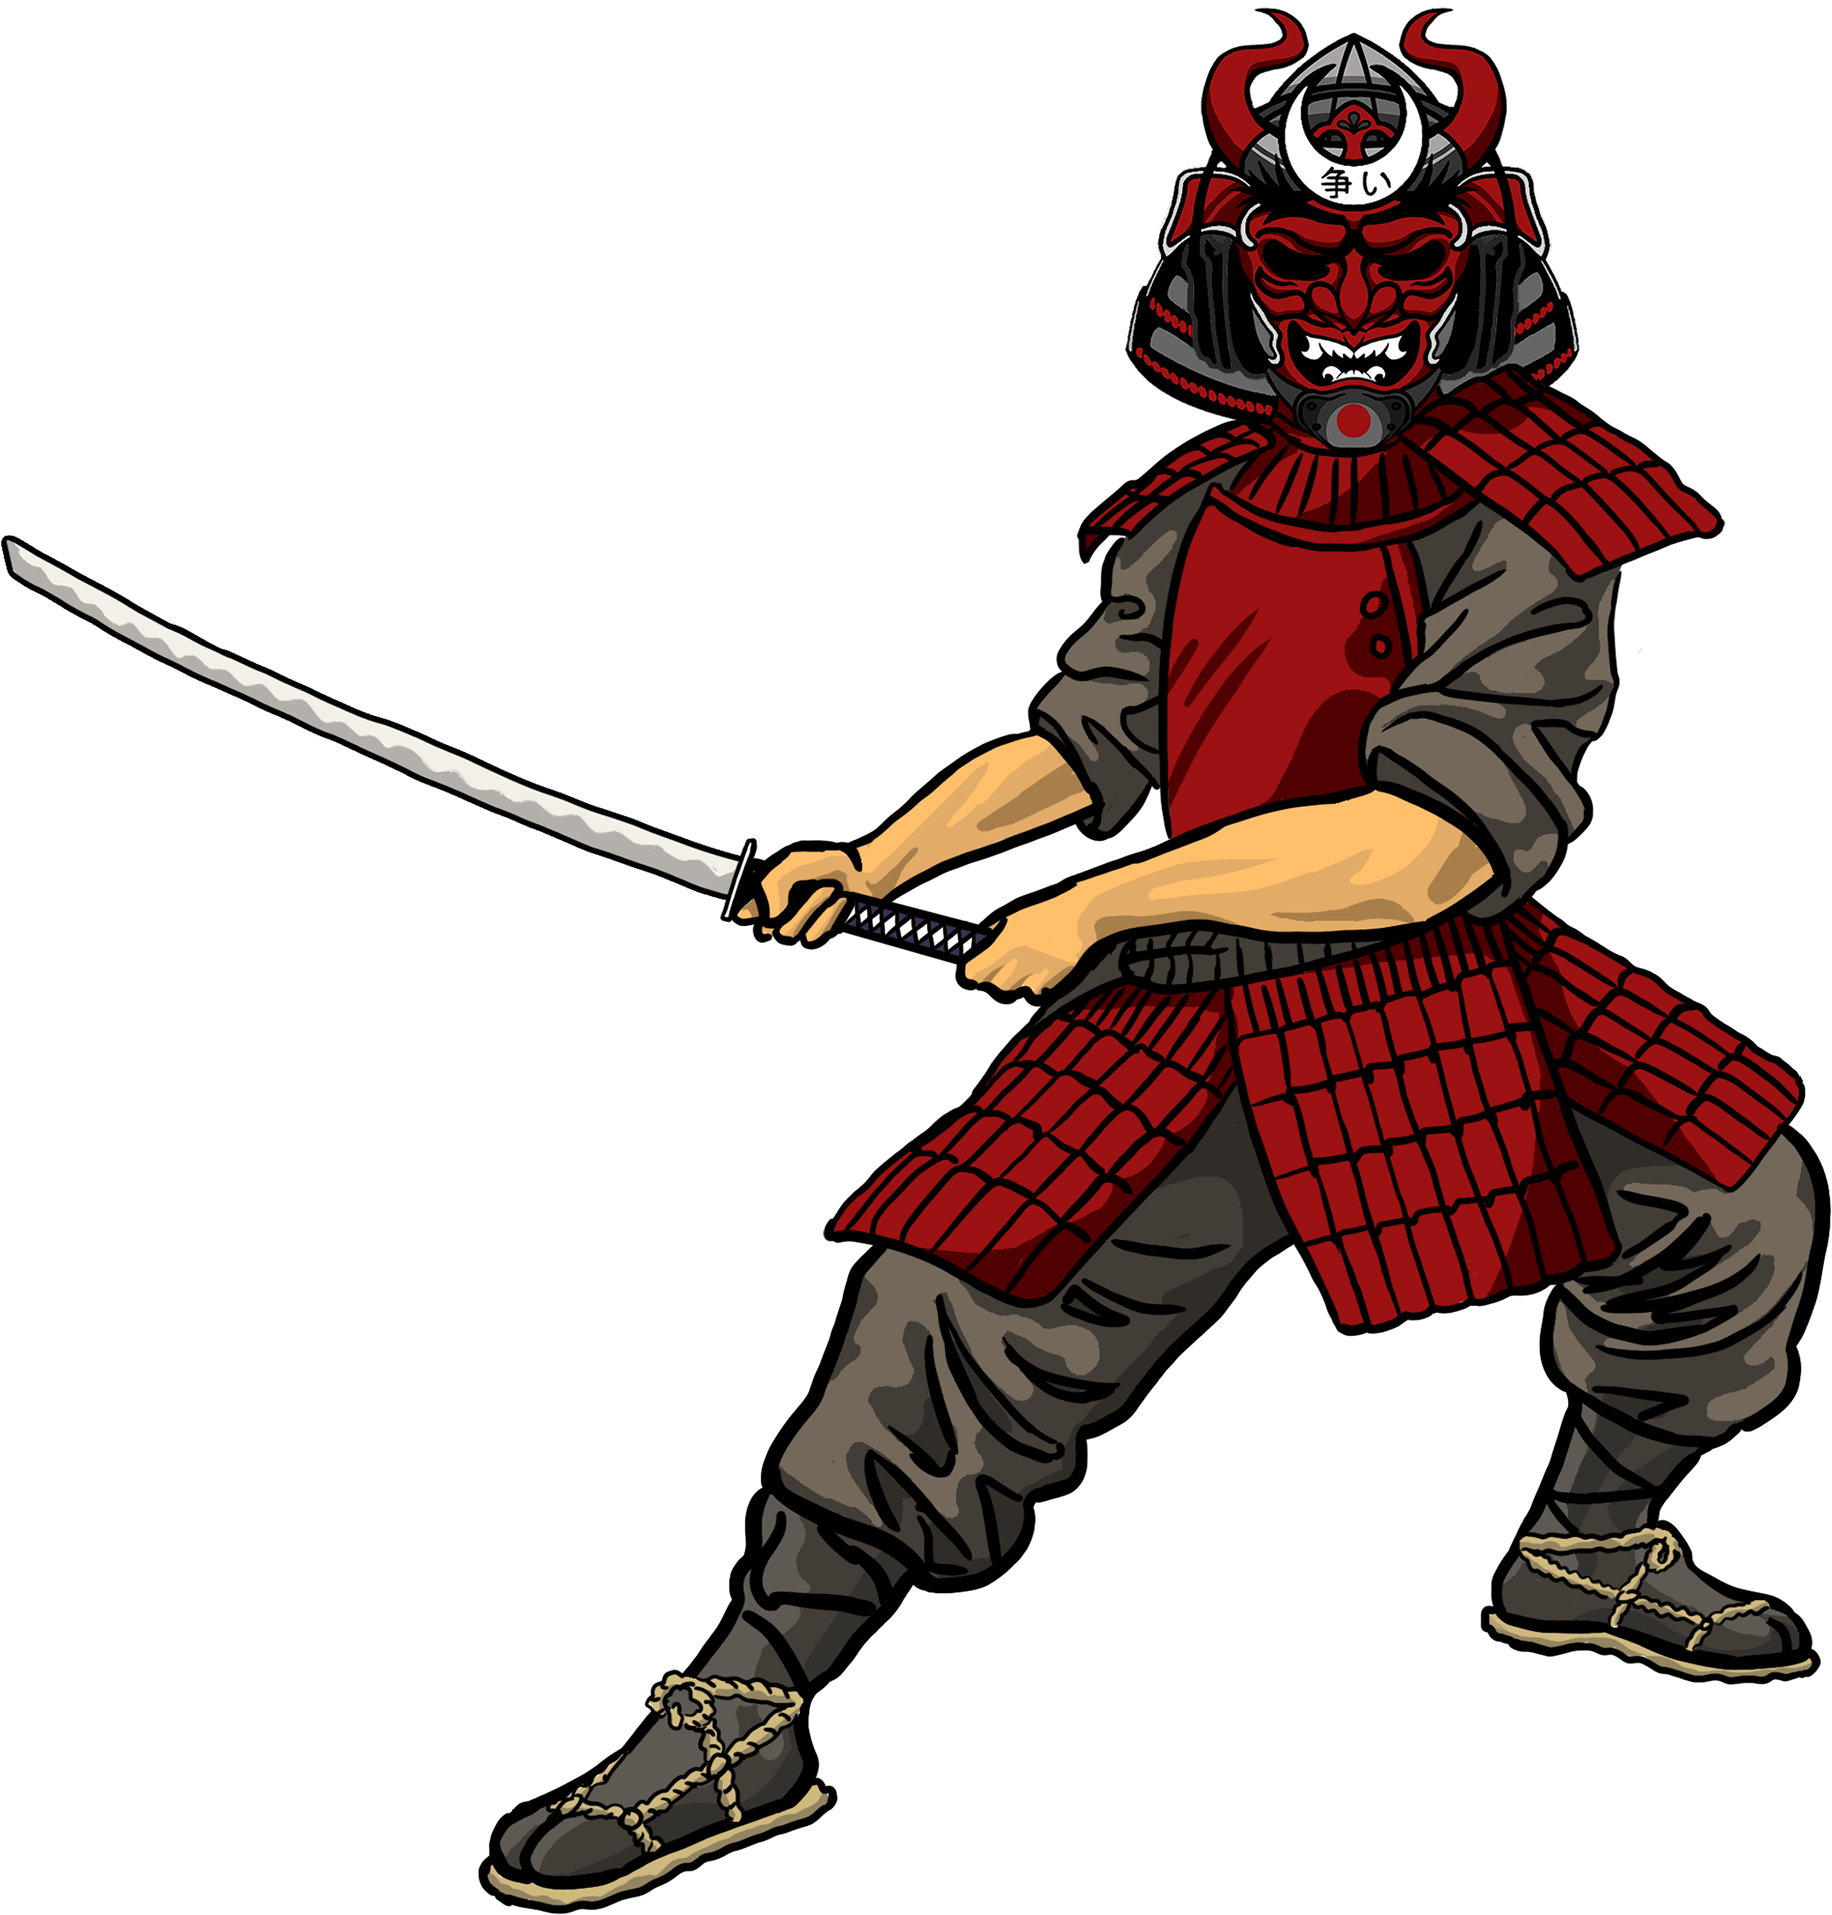 A Cartoon Of A Man In A Garment Holding A Sword